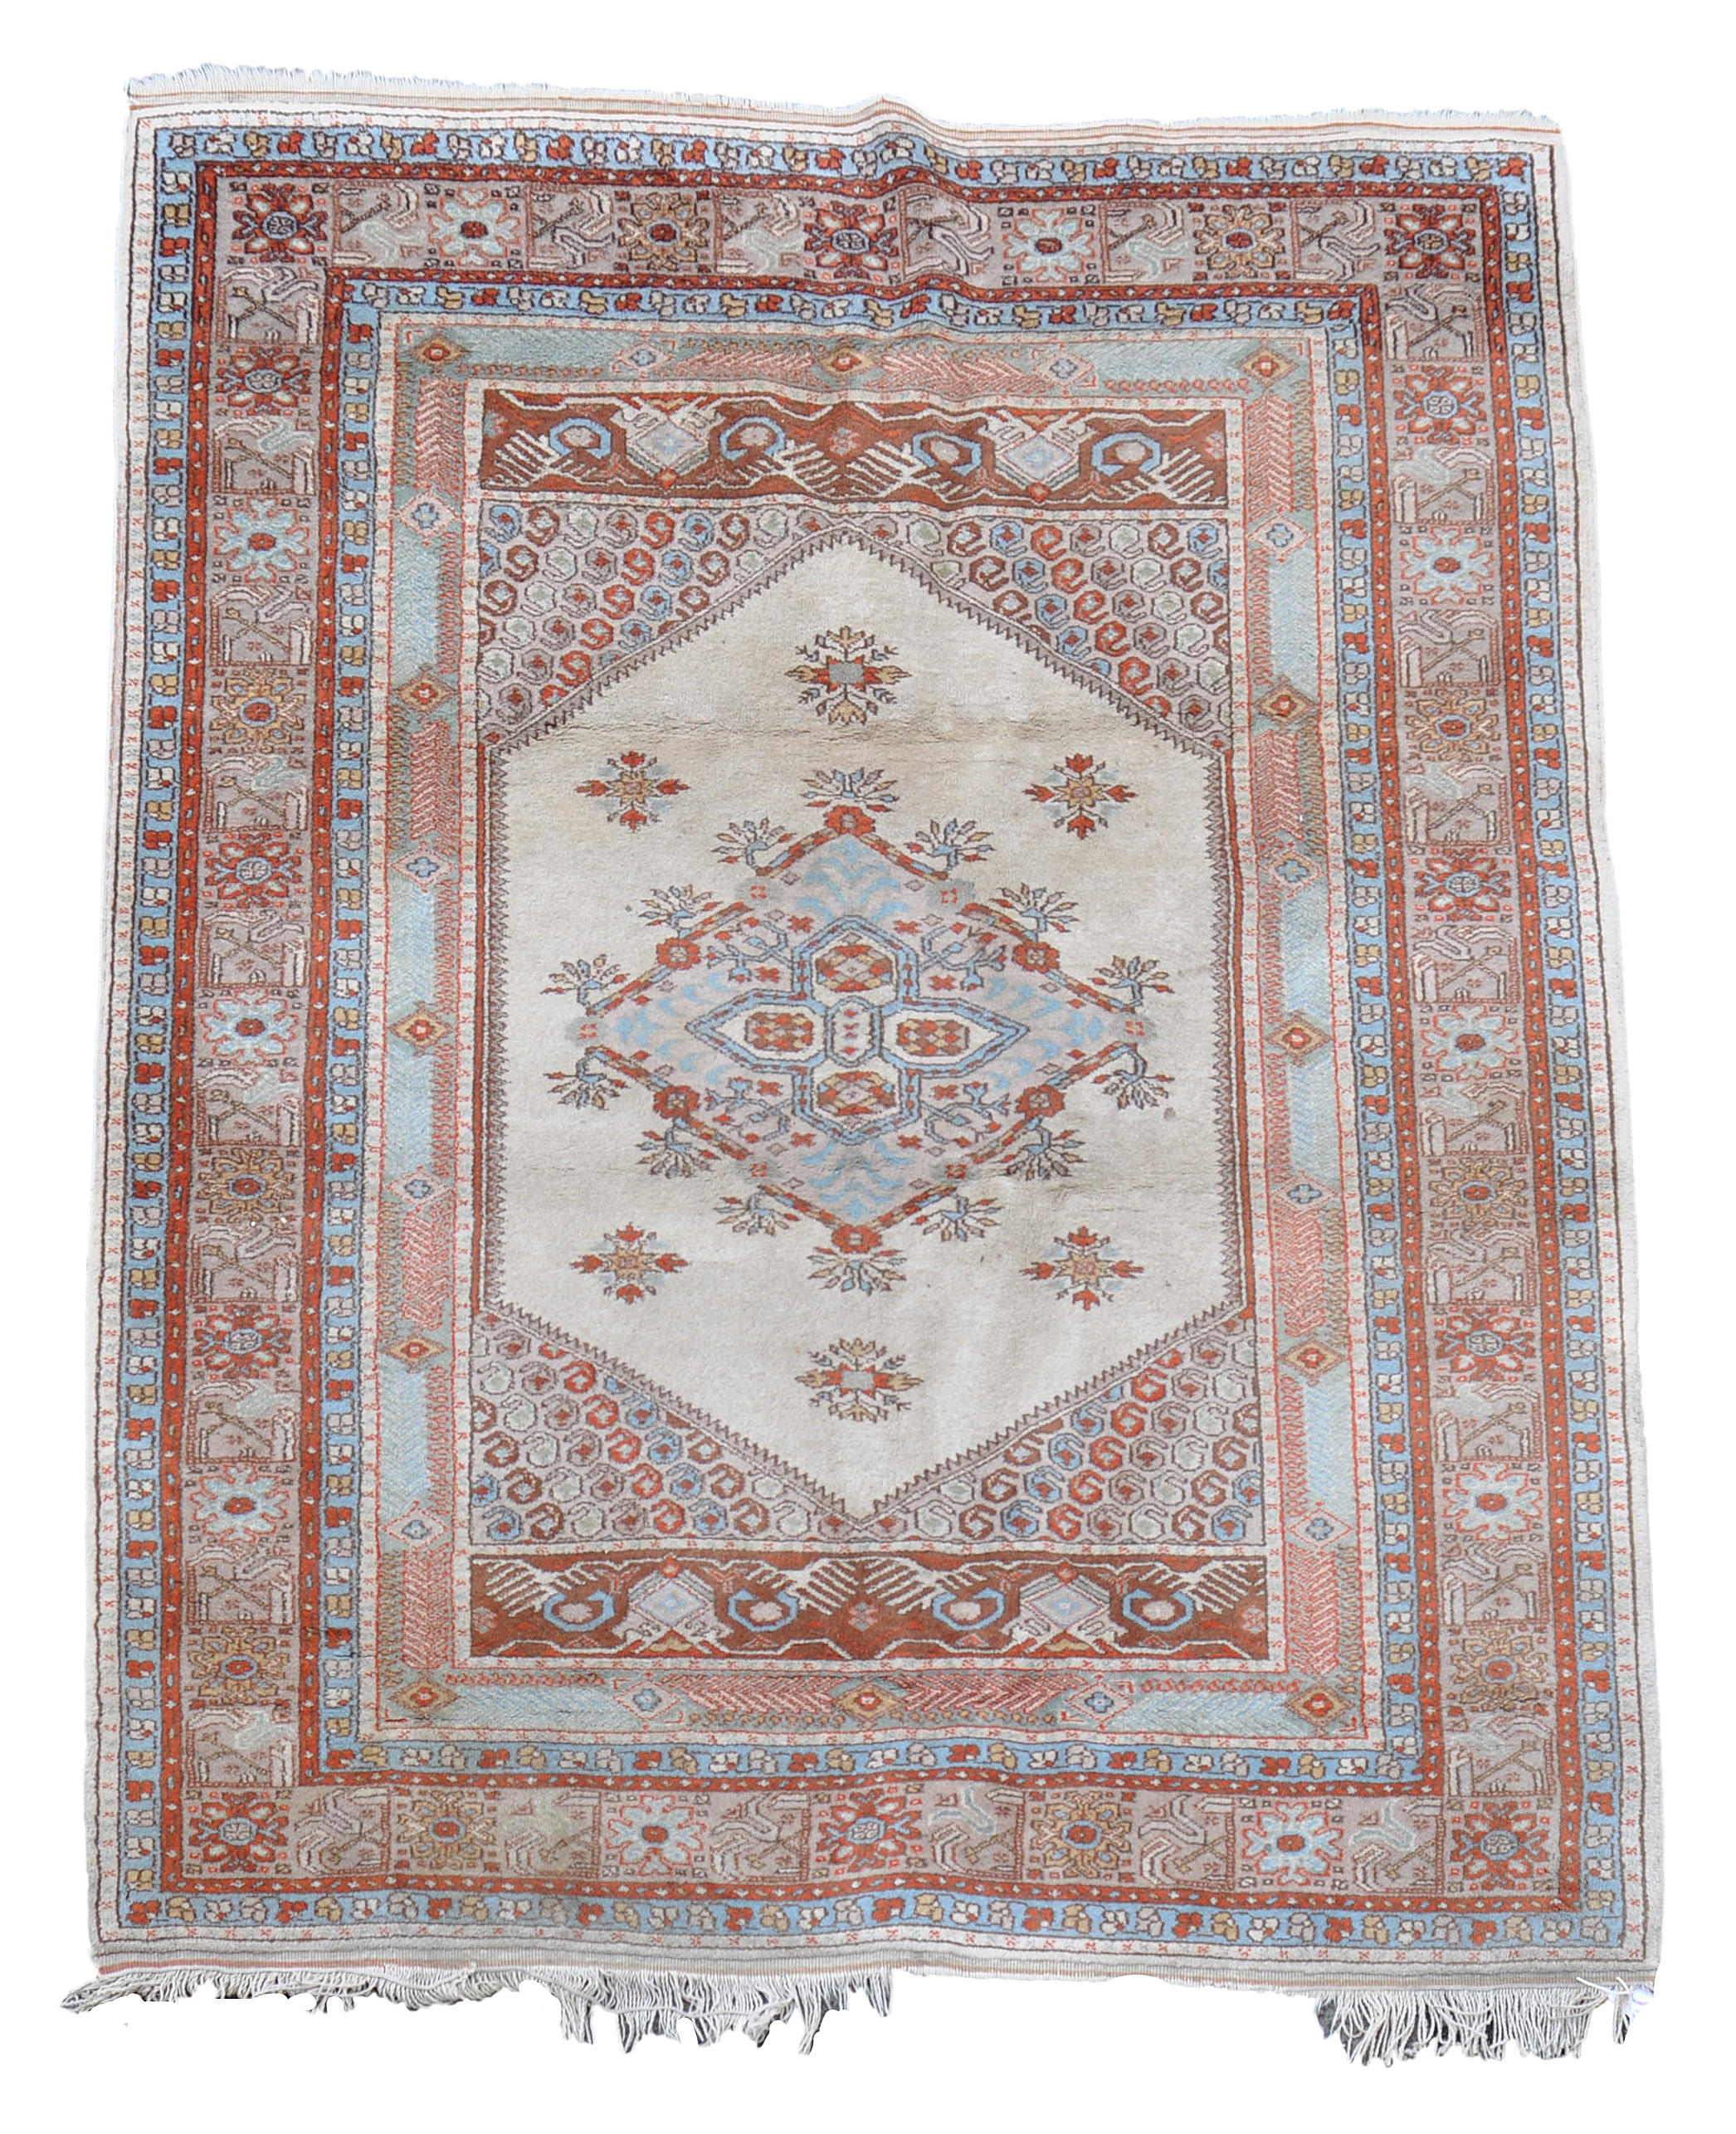 A Shiraz rug, approximately 220cm x 154cm